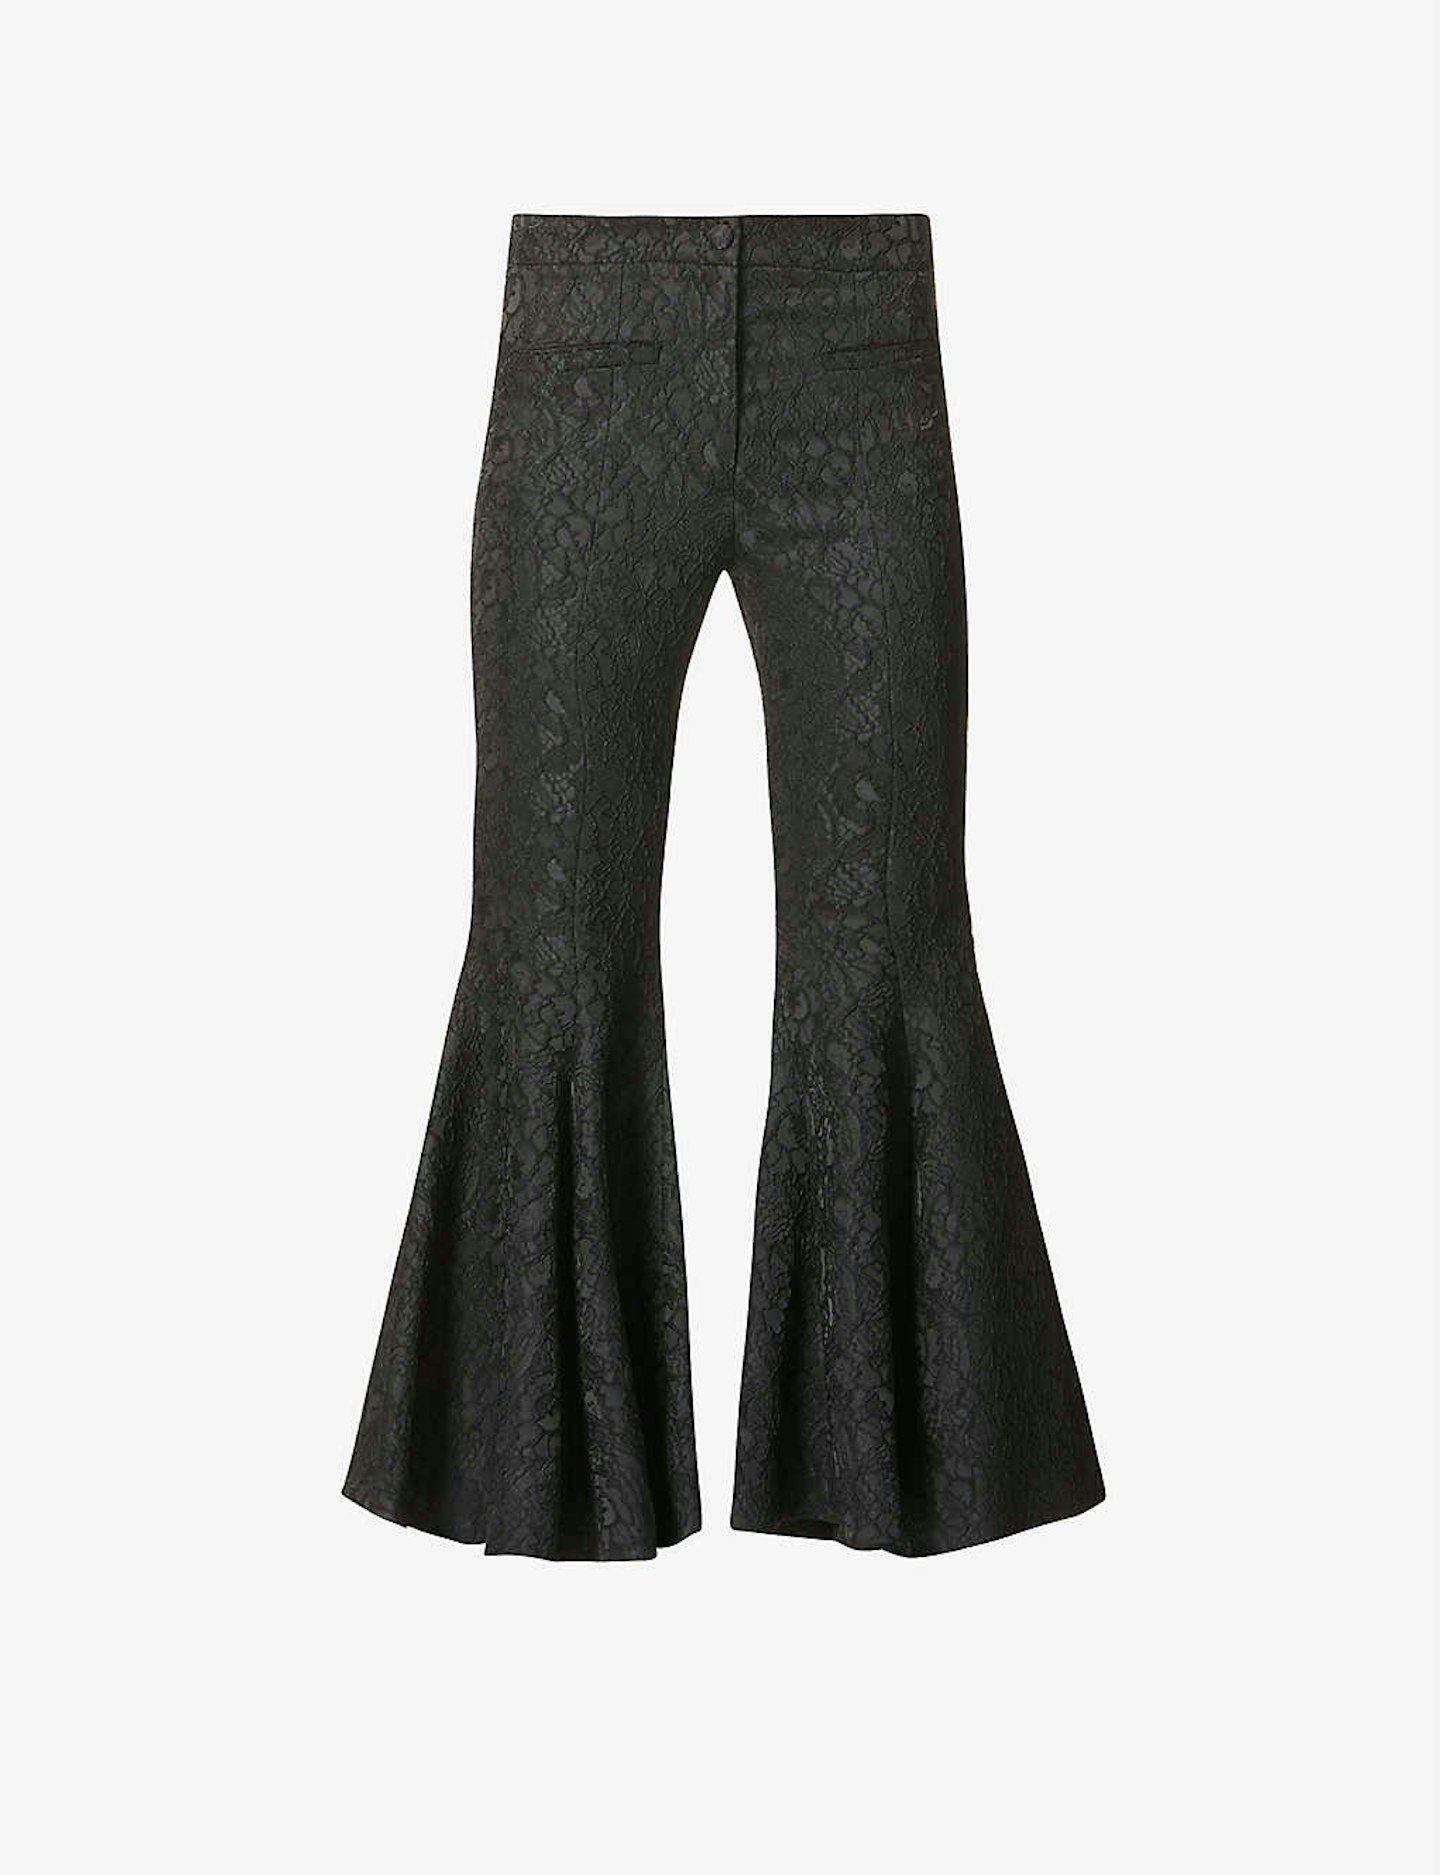 Hyun Mi Nielsen, Flared High-Rise Woven Trousers, £925